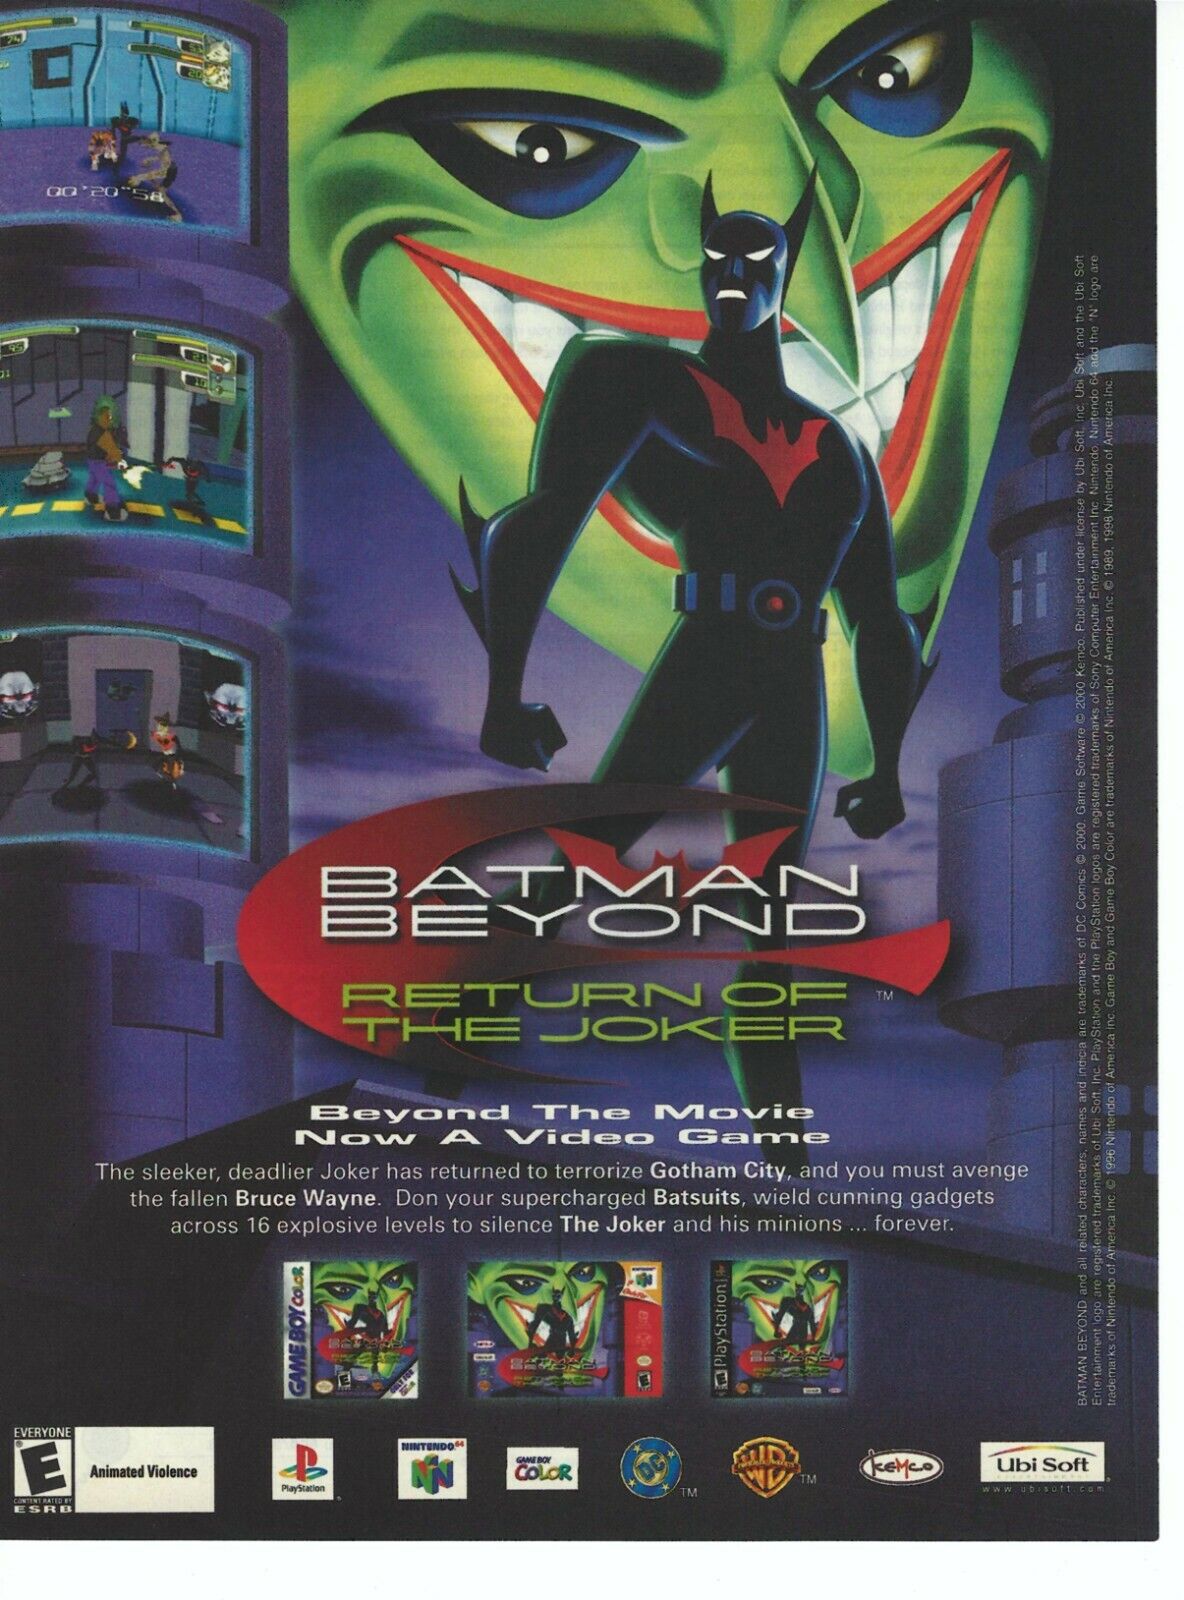 Batman Beyond: Return of the Joker Print Ad/Poster Art Playstation PS1 N64  | eBay